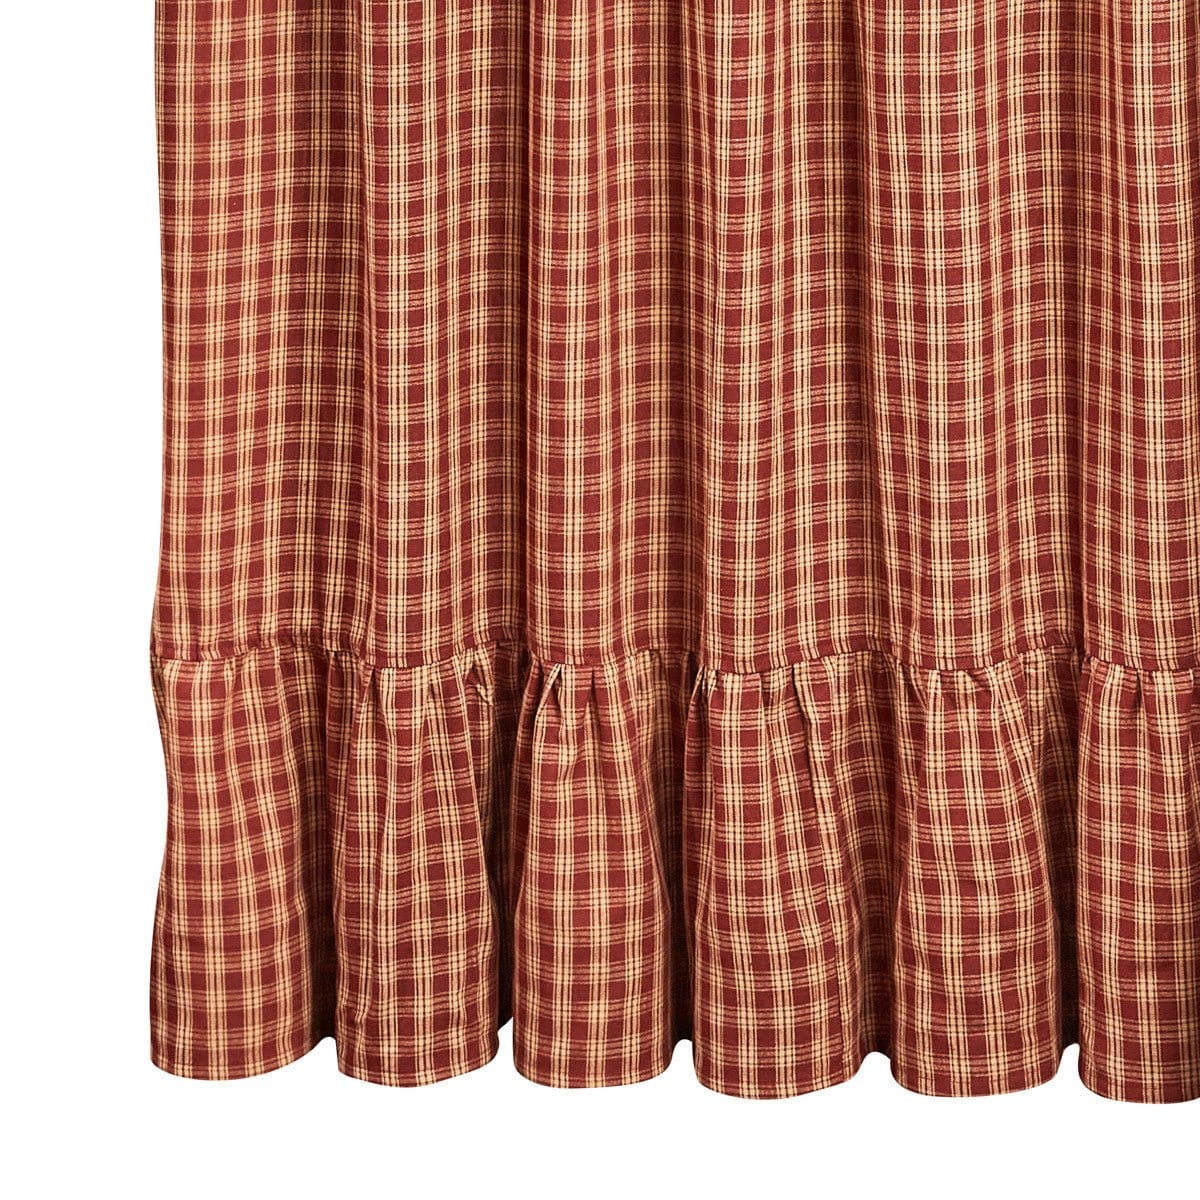 Sturbridge in Wine Ruffled Plaid Shower Curtain-Park Designs-The Village Merchant